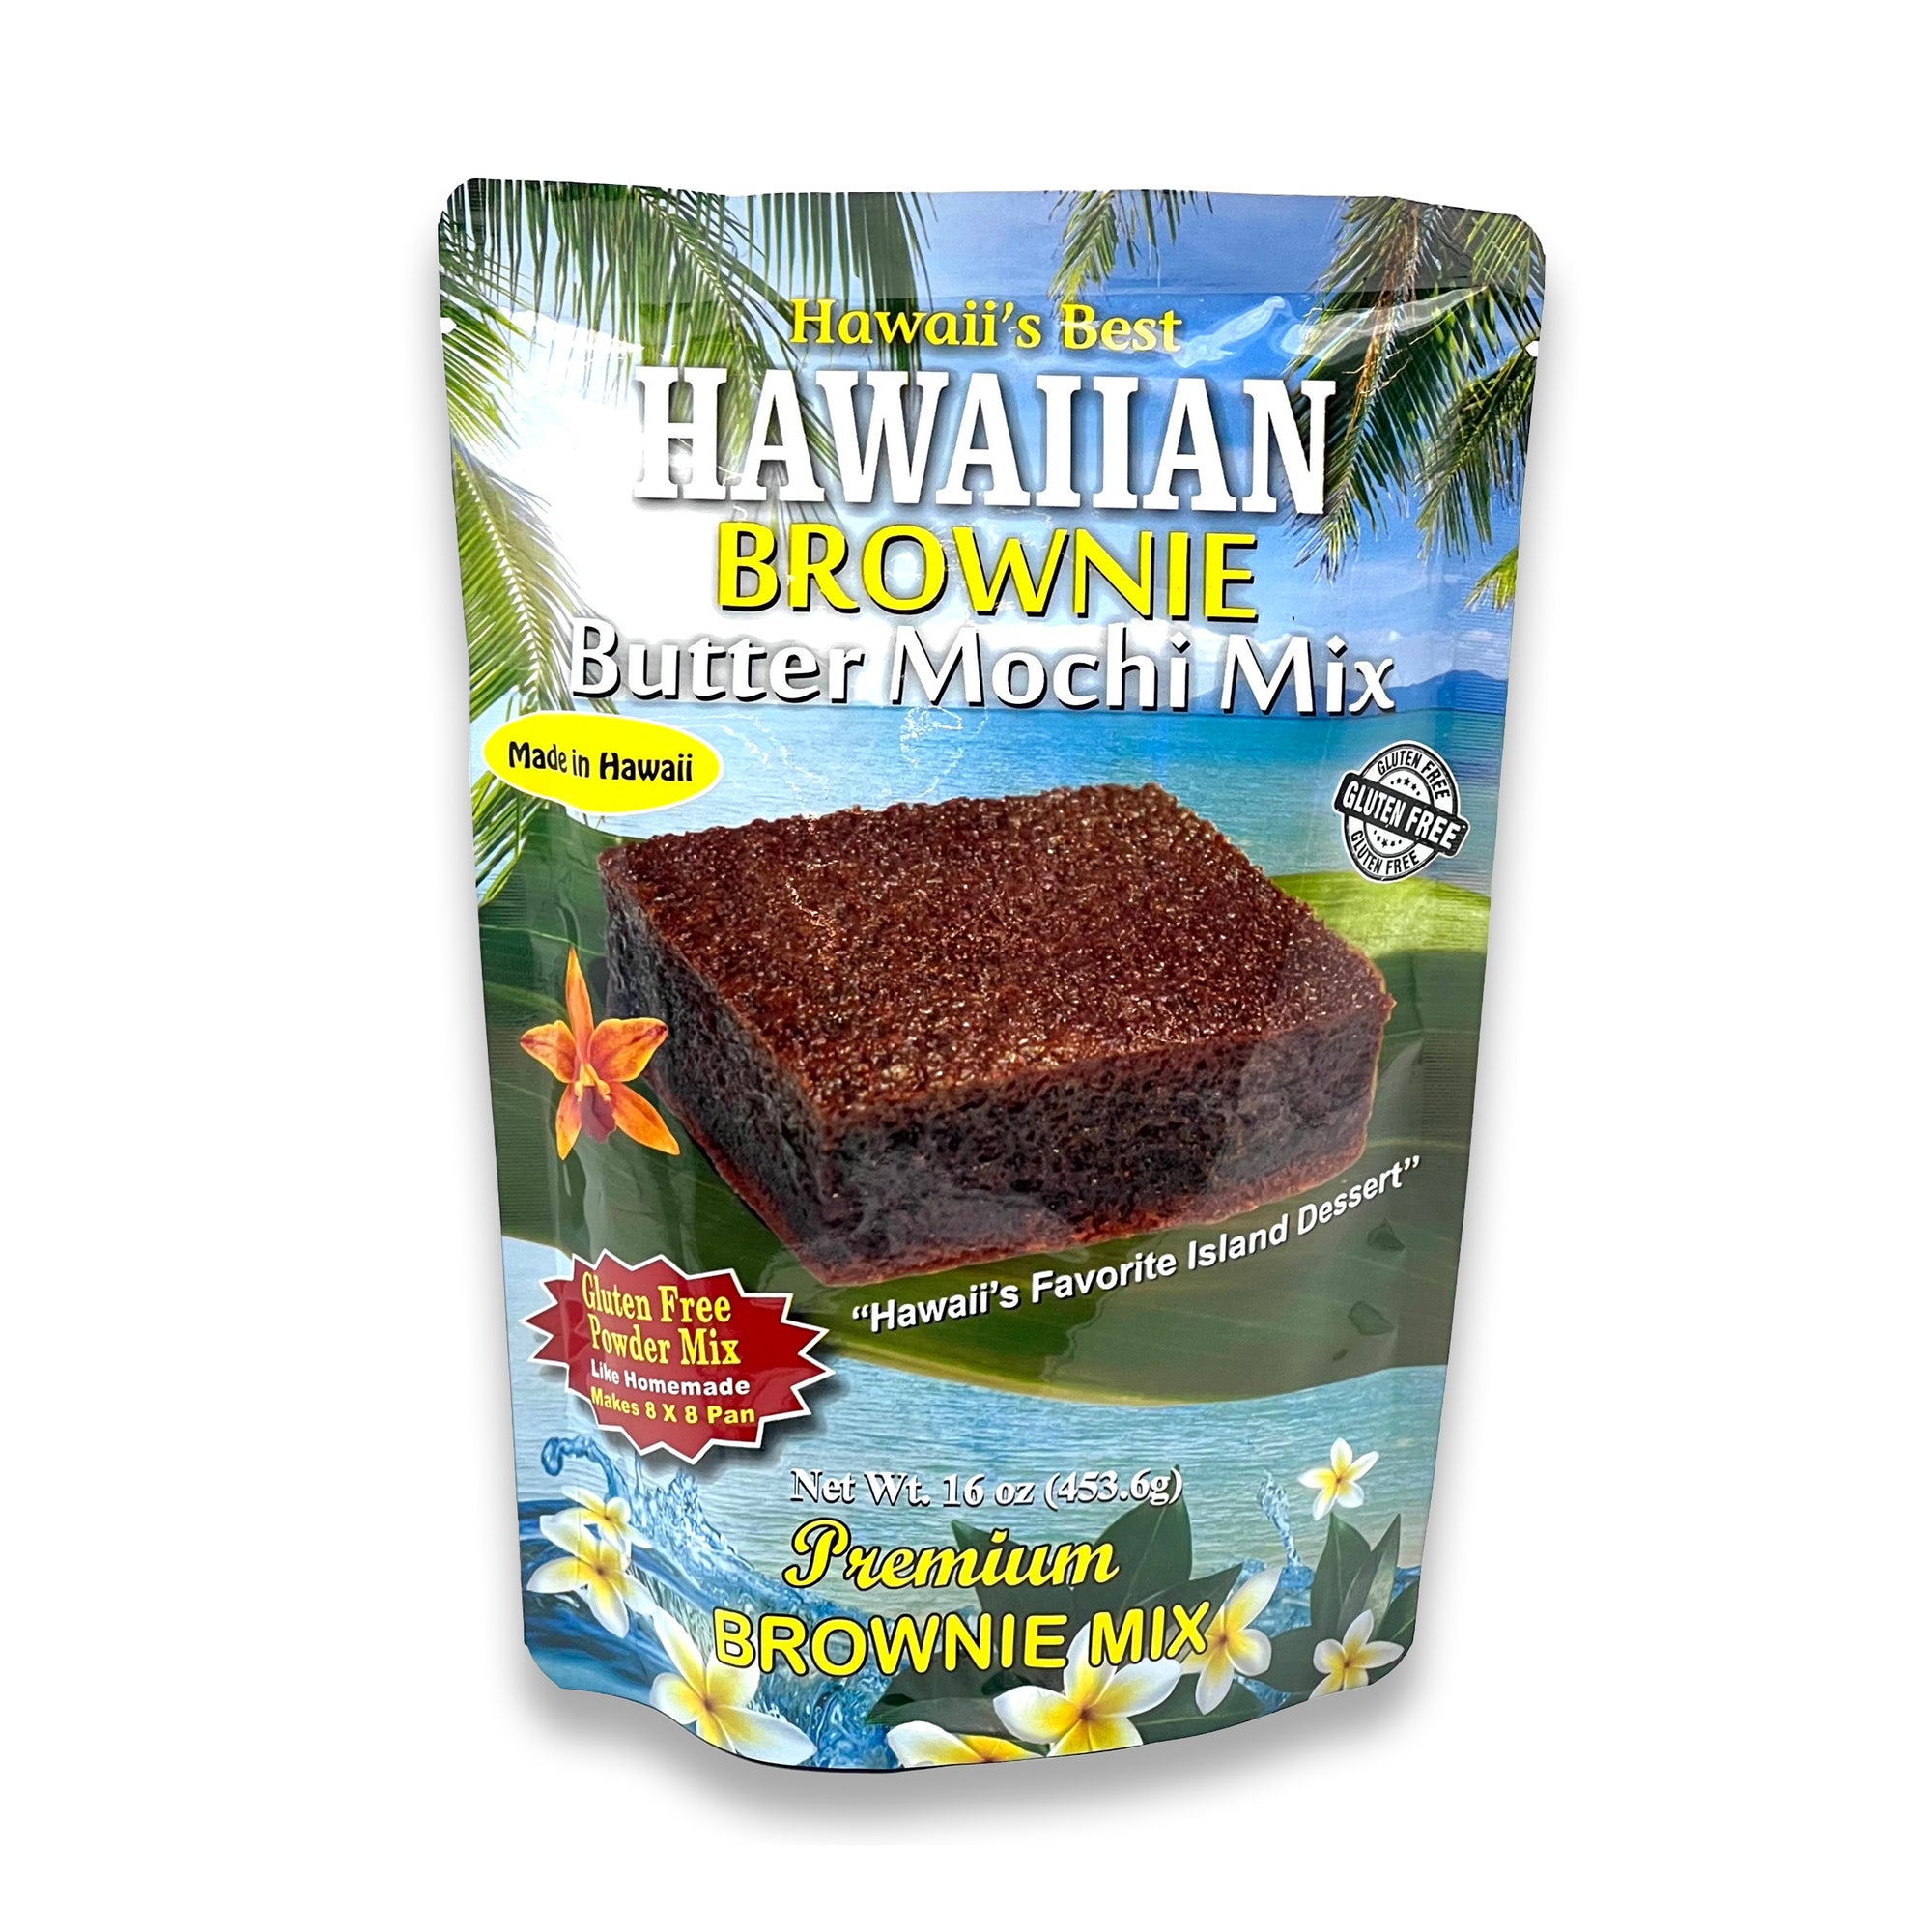 Pop-Up Mākeke - Hawaii's Best Mixes - Hawaiian Butter Mochi Brownie Mix - Front View